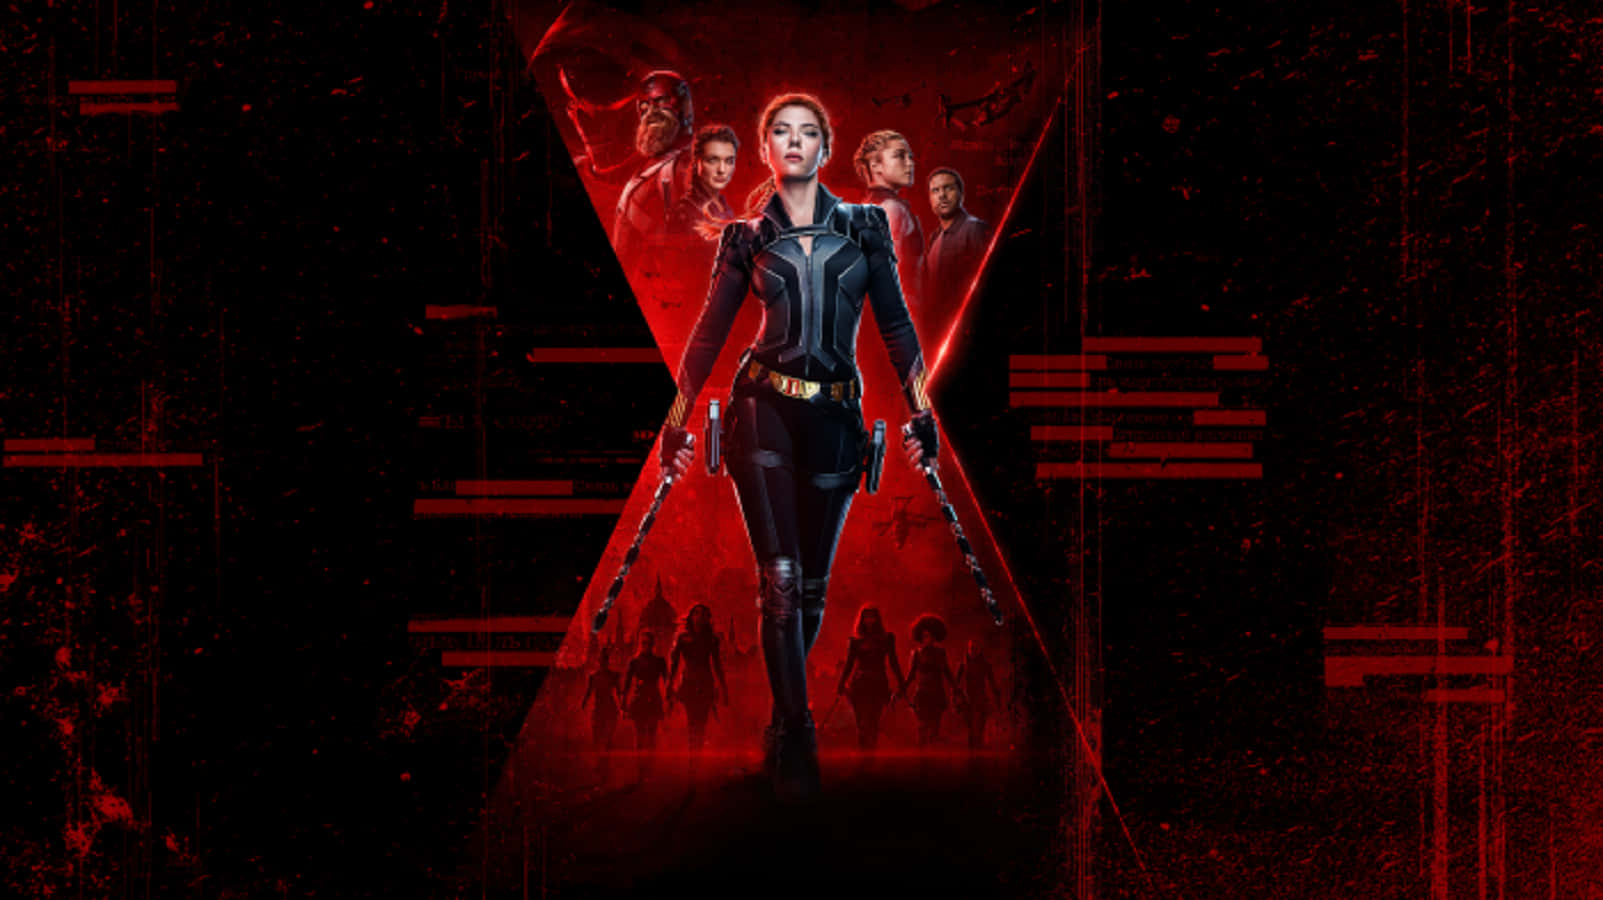 Natasha Romanoff trusts in the power of the Black Widow